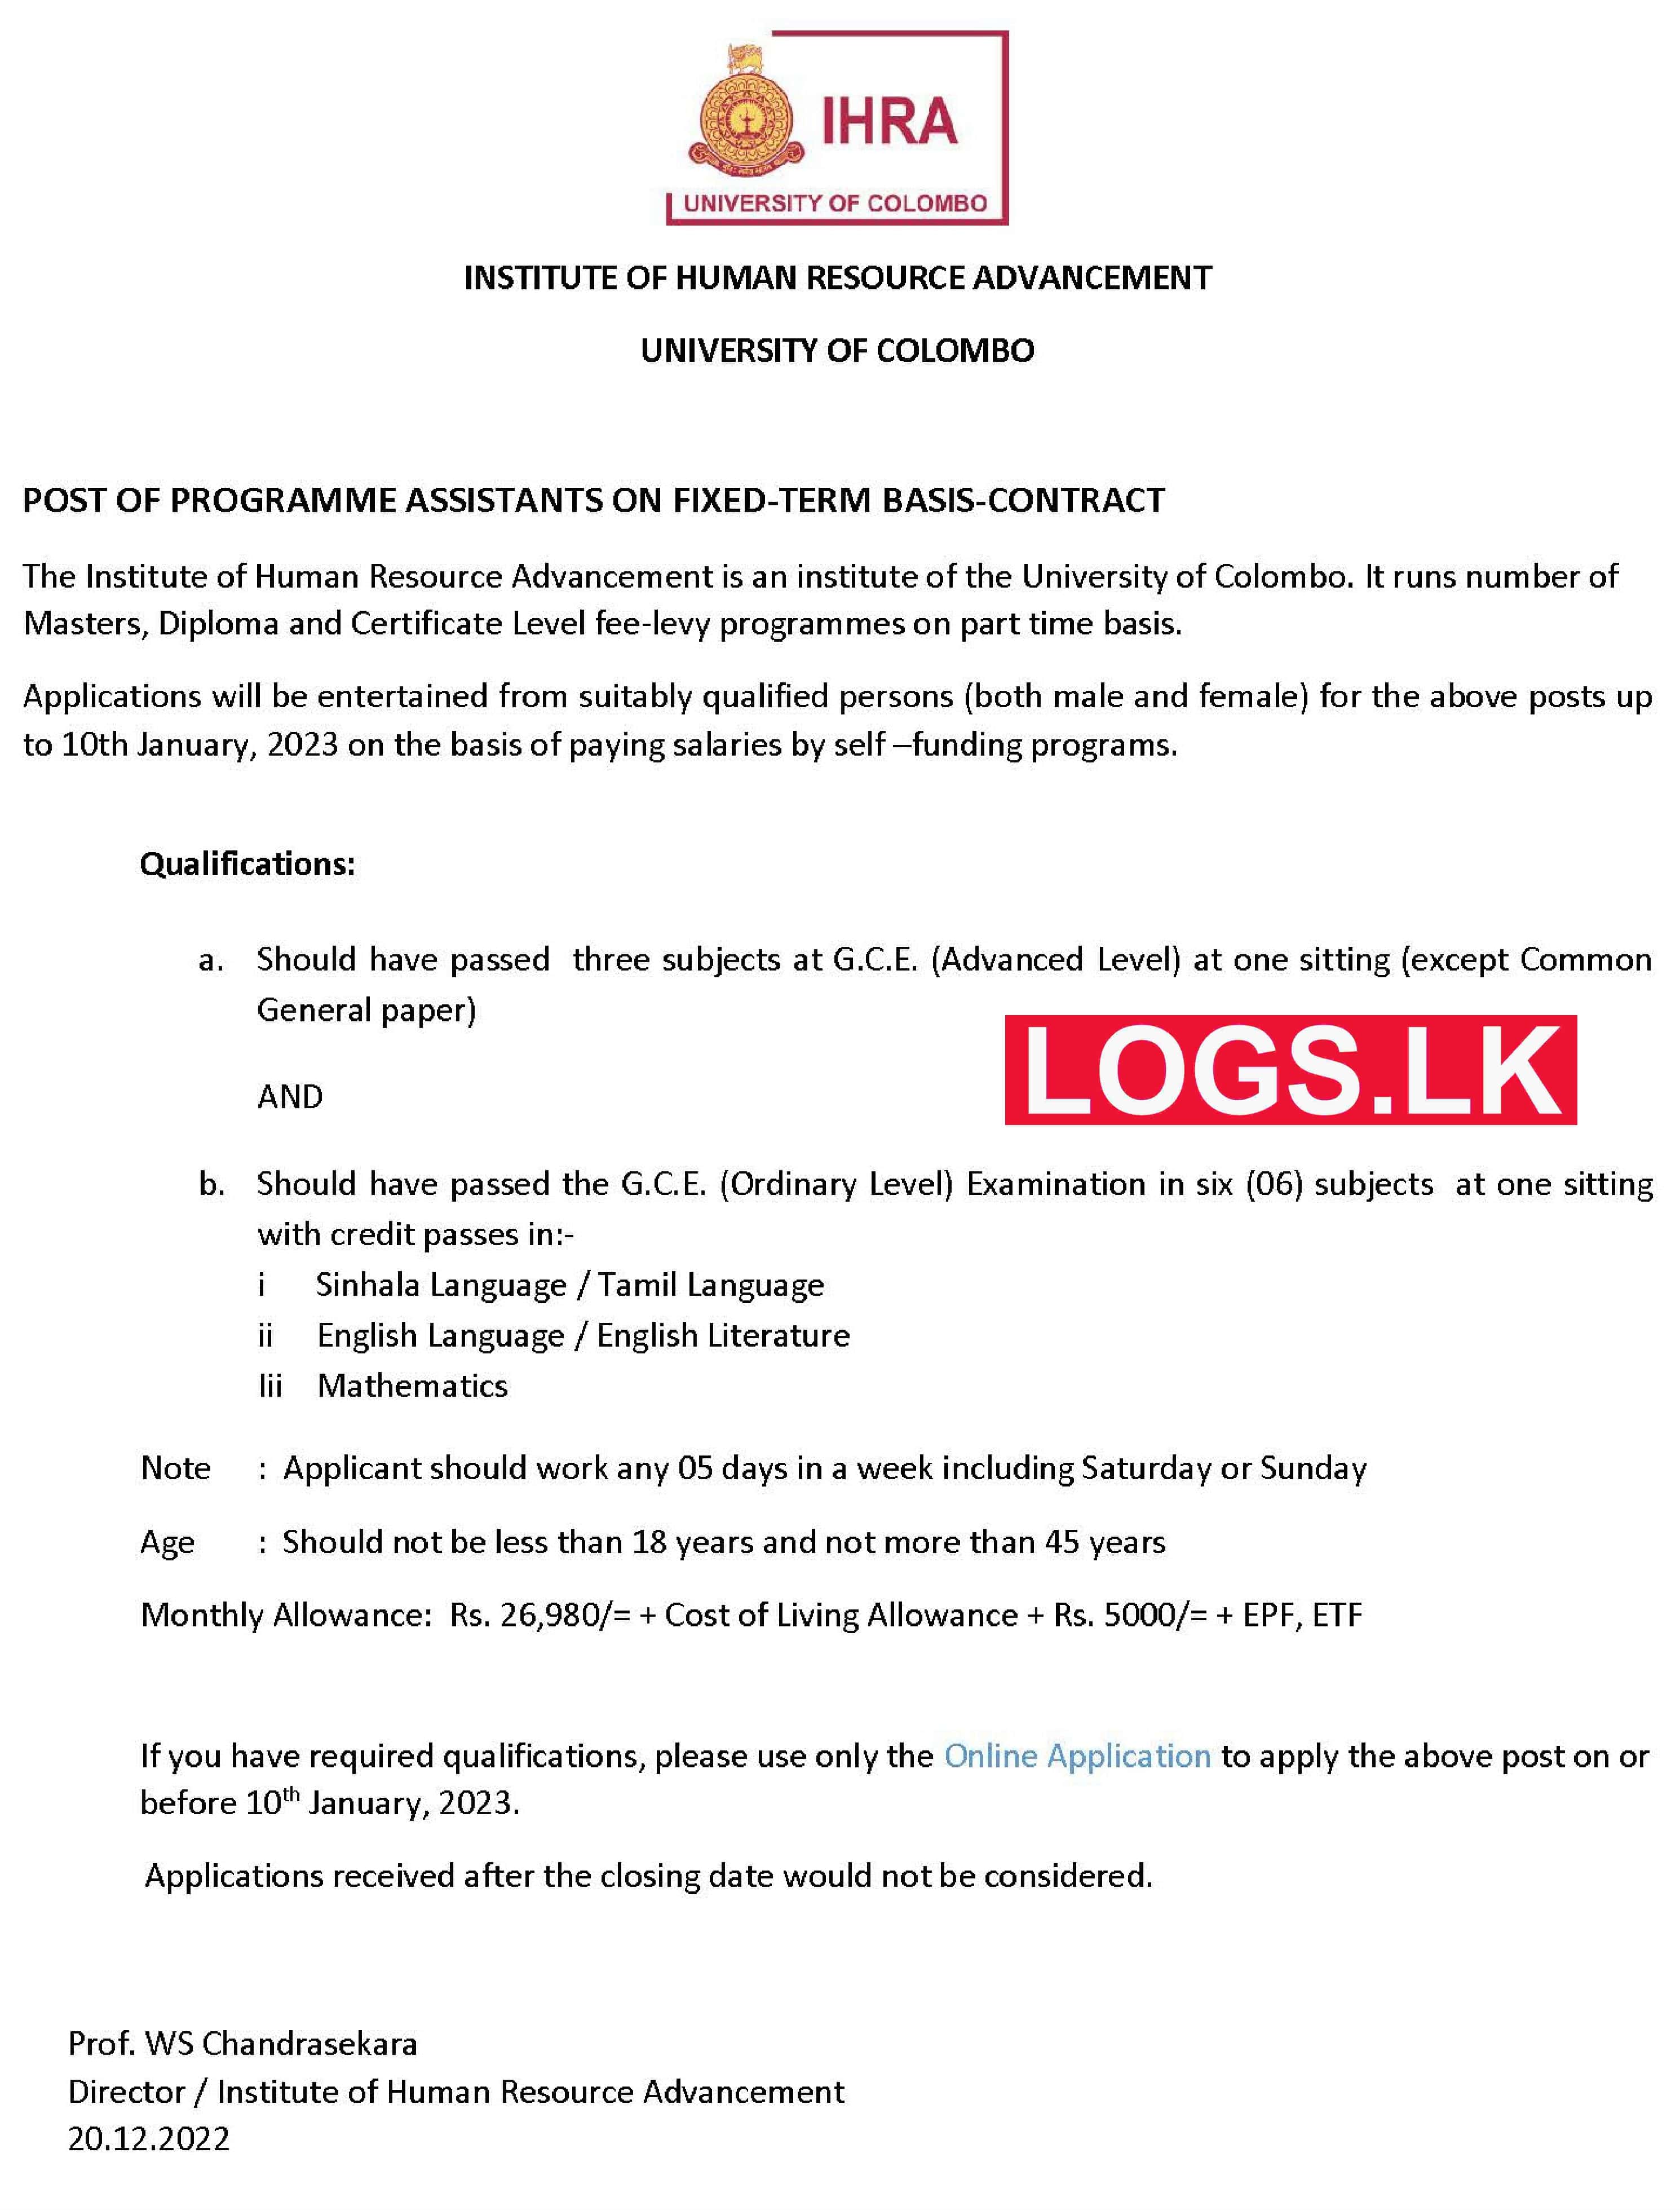 Program Assistant - University of Colombo Vacancies 2023 Application Form, Details Download